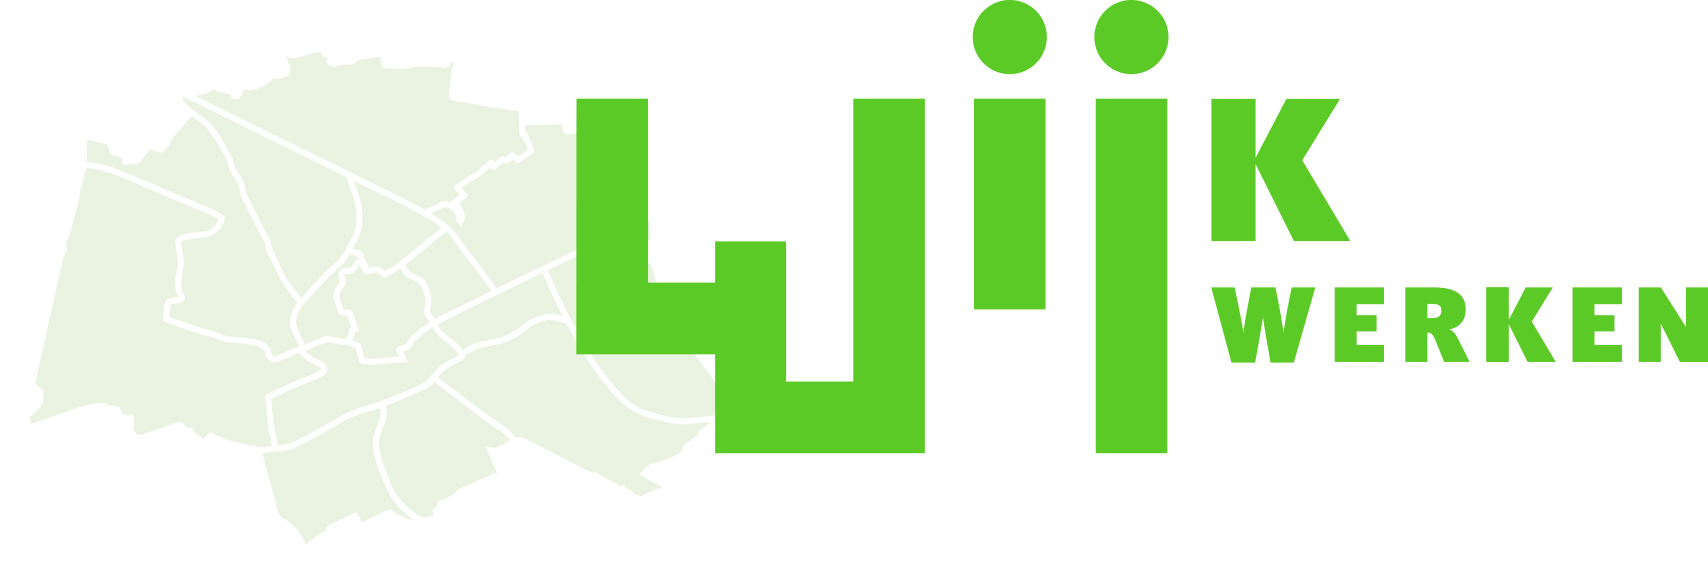 wijkwerken logo